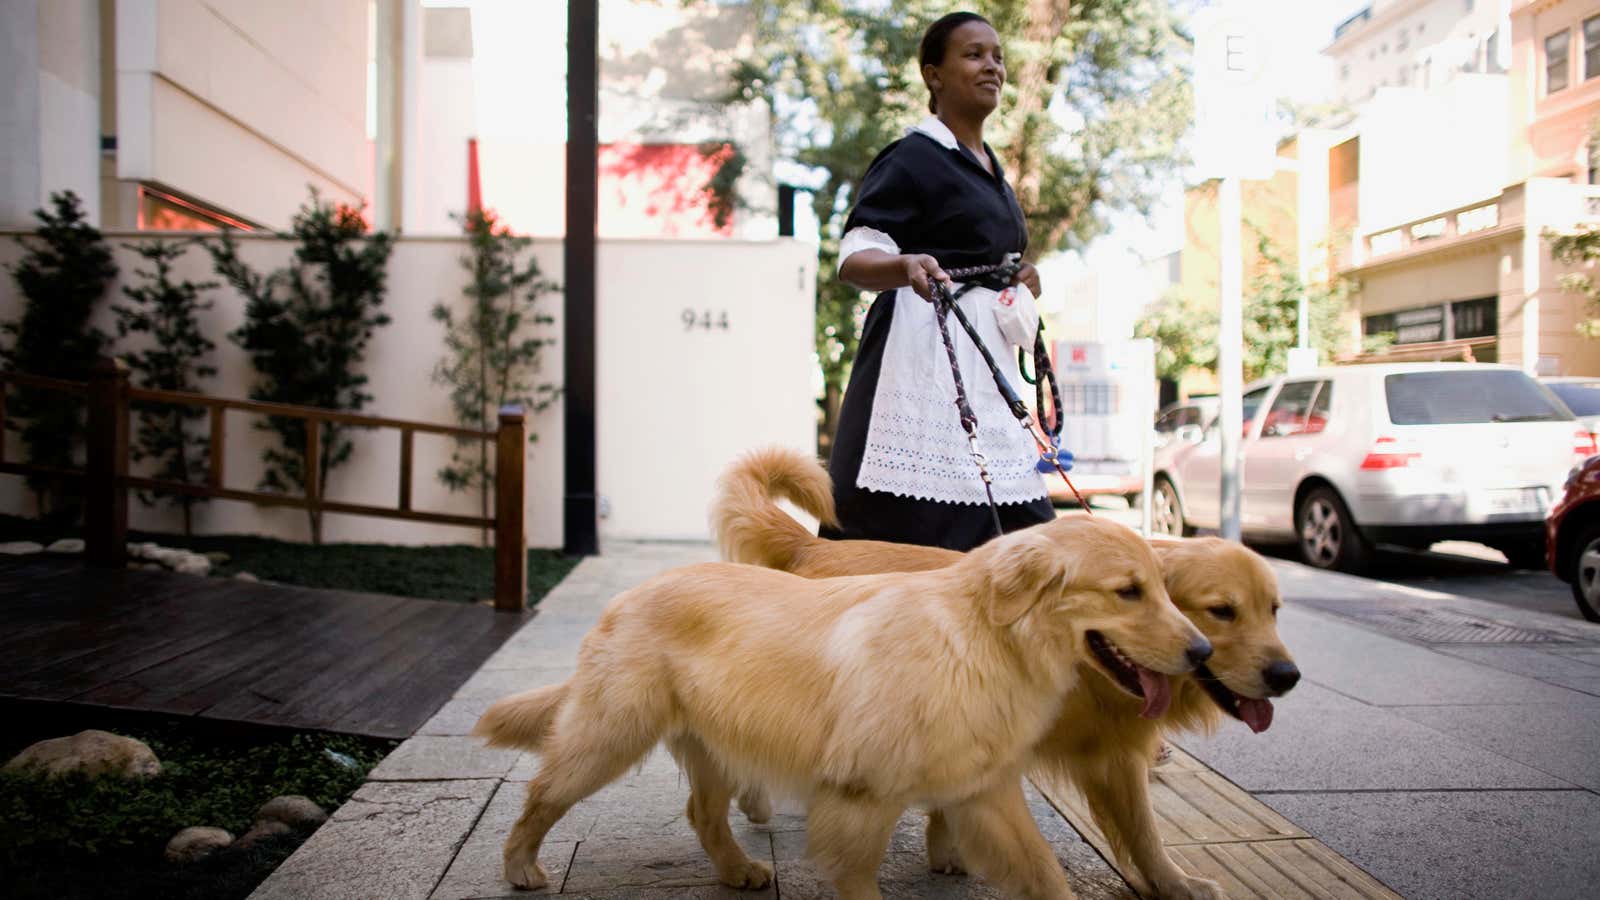 A maid in Sao Paulo, Brazil walks dogs along posh Oscar Freire street.